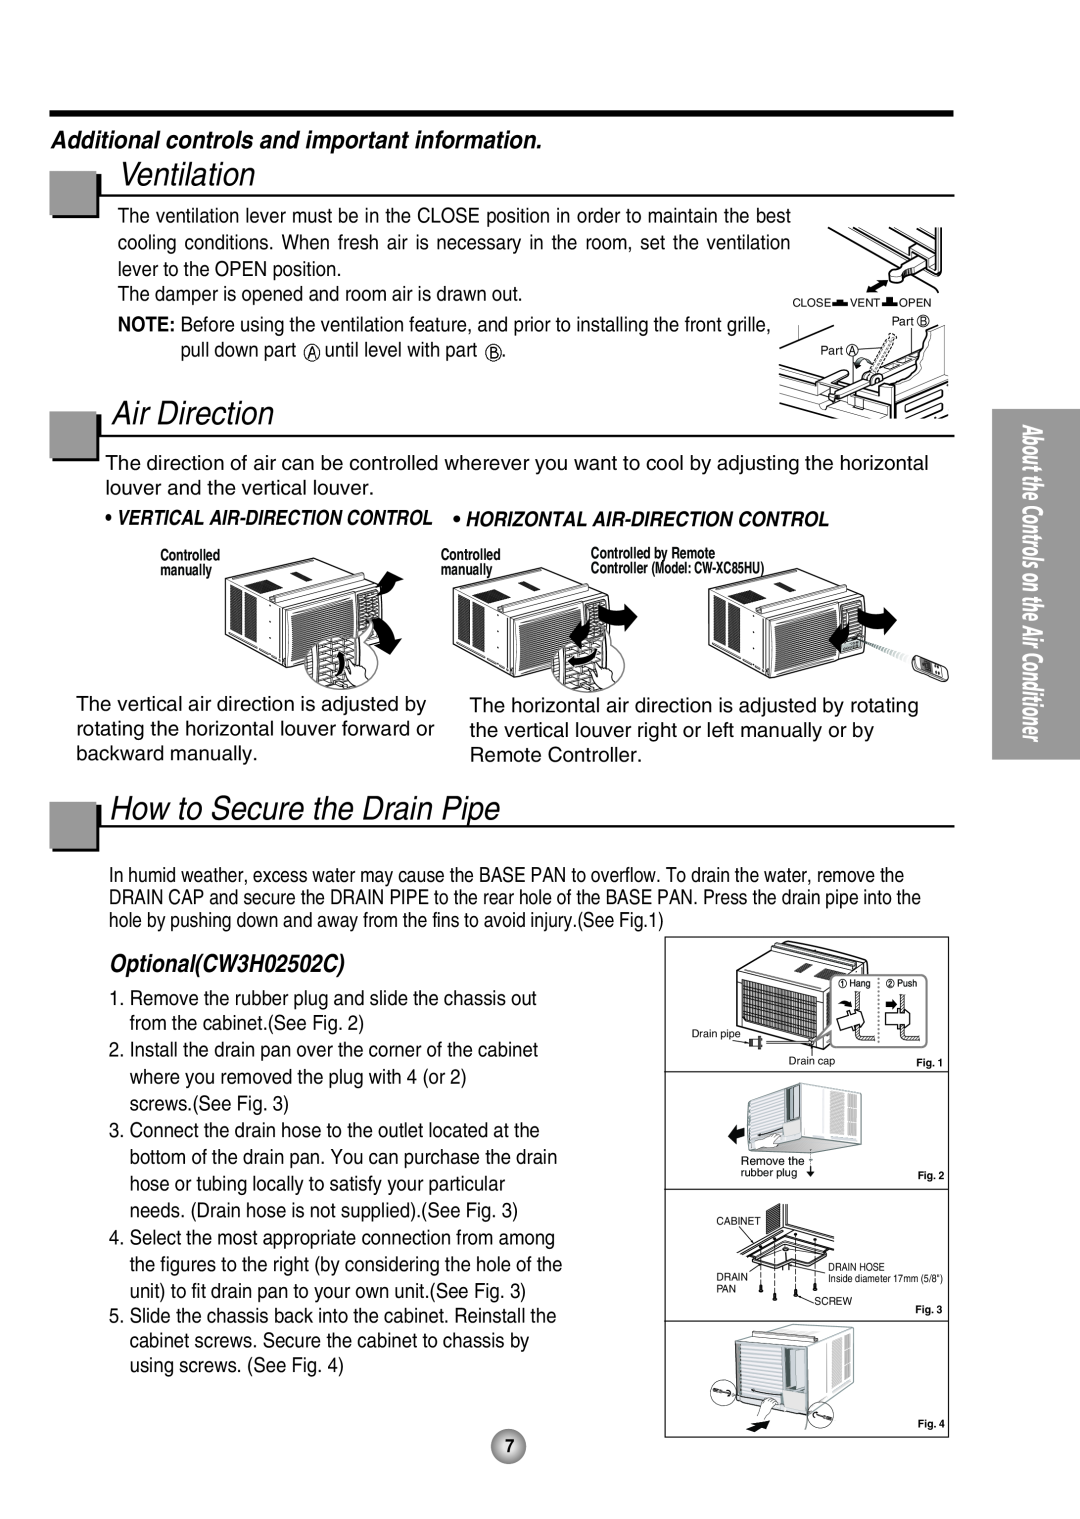 Panasonic CW-XC85HU, CW-XC65HU manual Ventilation, Air Direction, How to Secure the Drain Pipe, OptionalCW3H02502C 